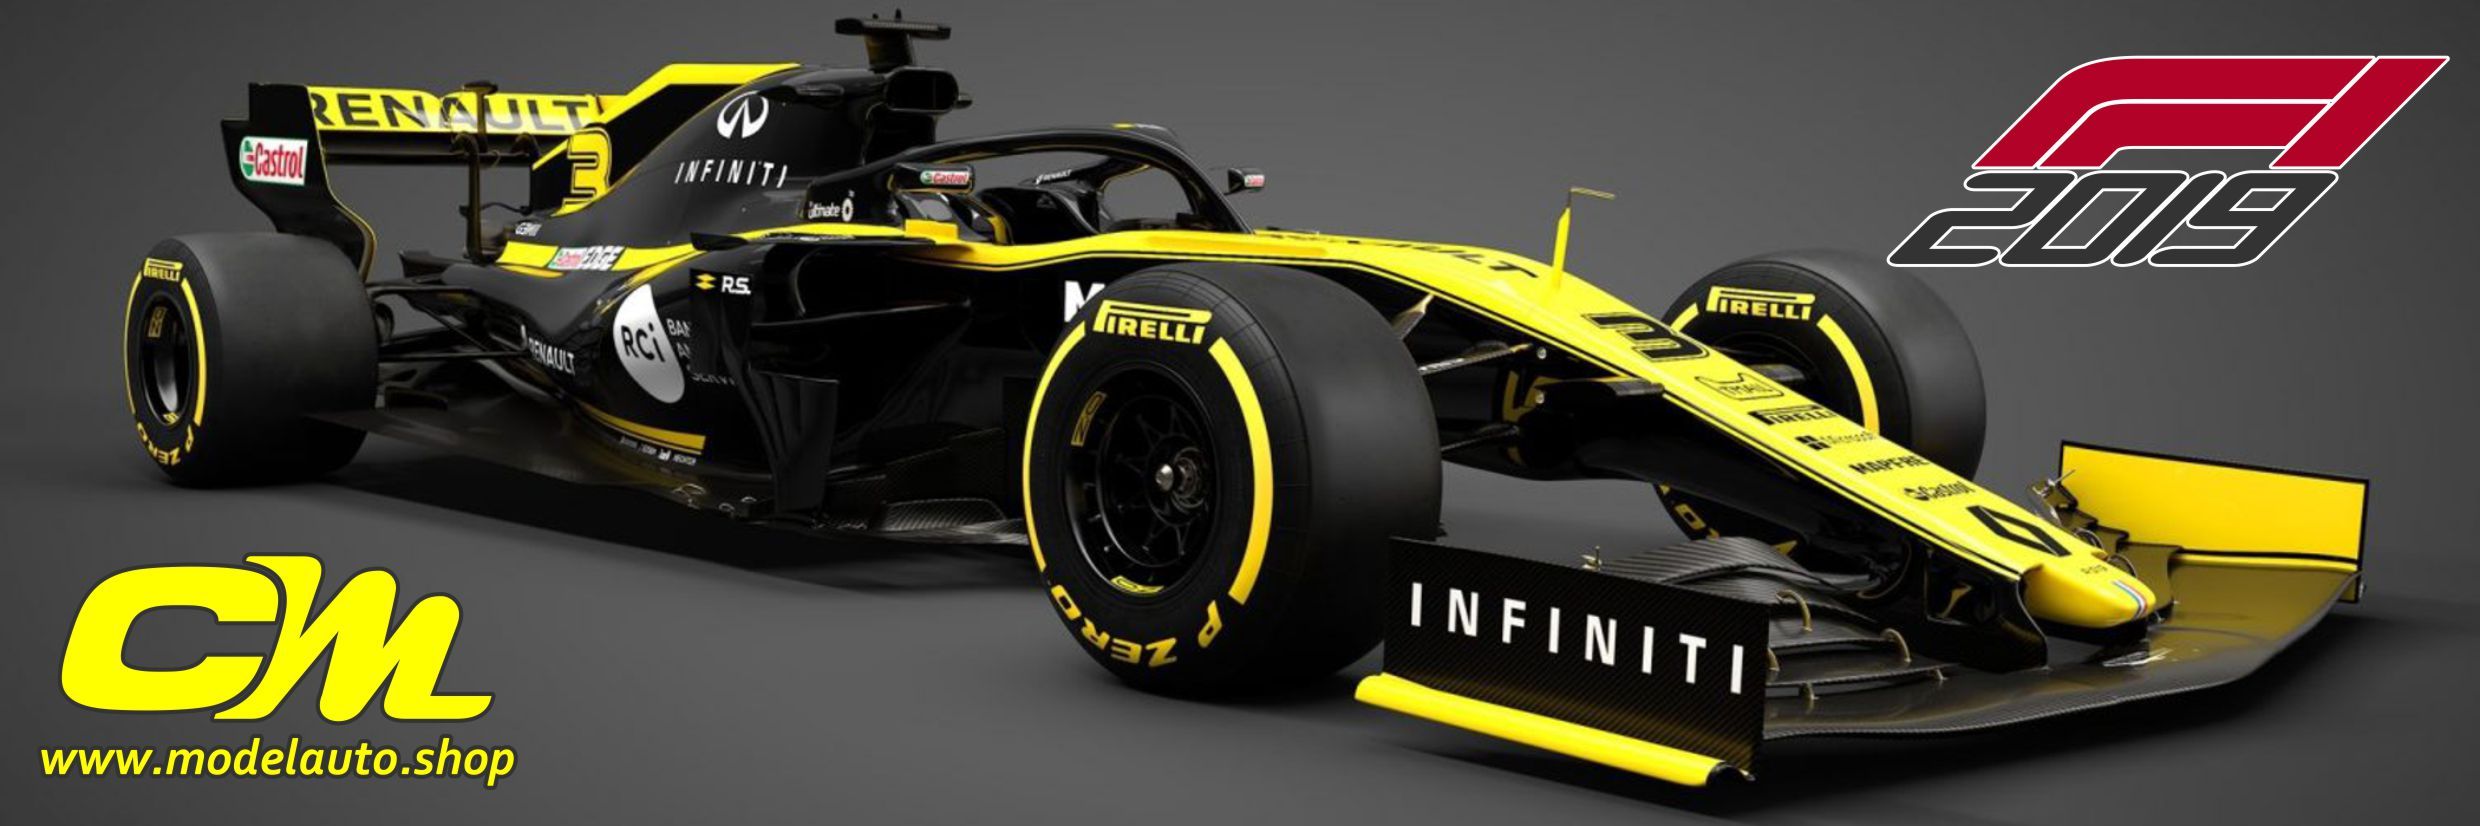 2019_Renault_F1